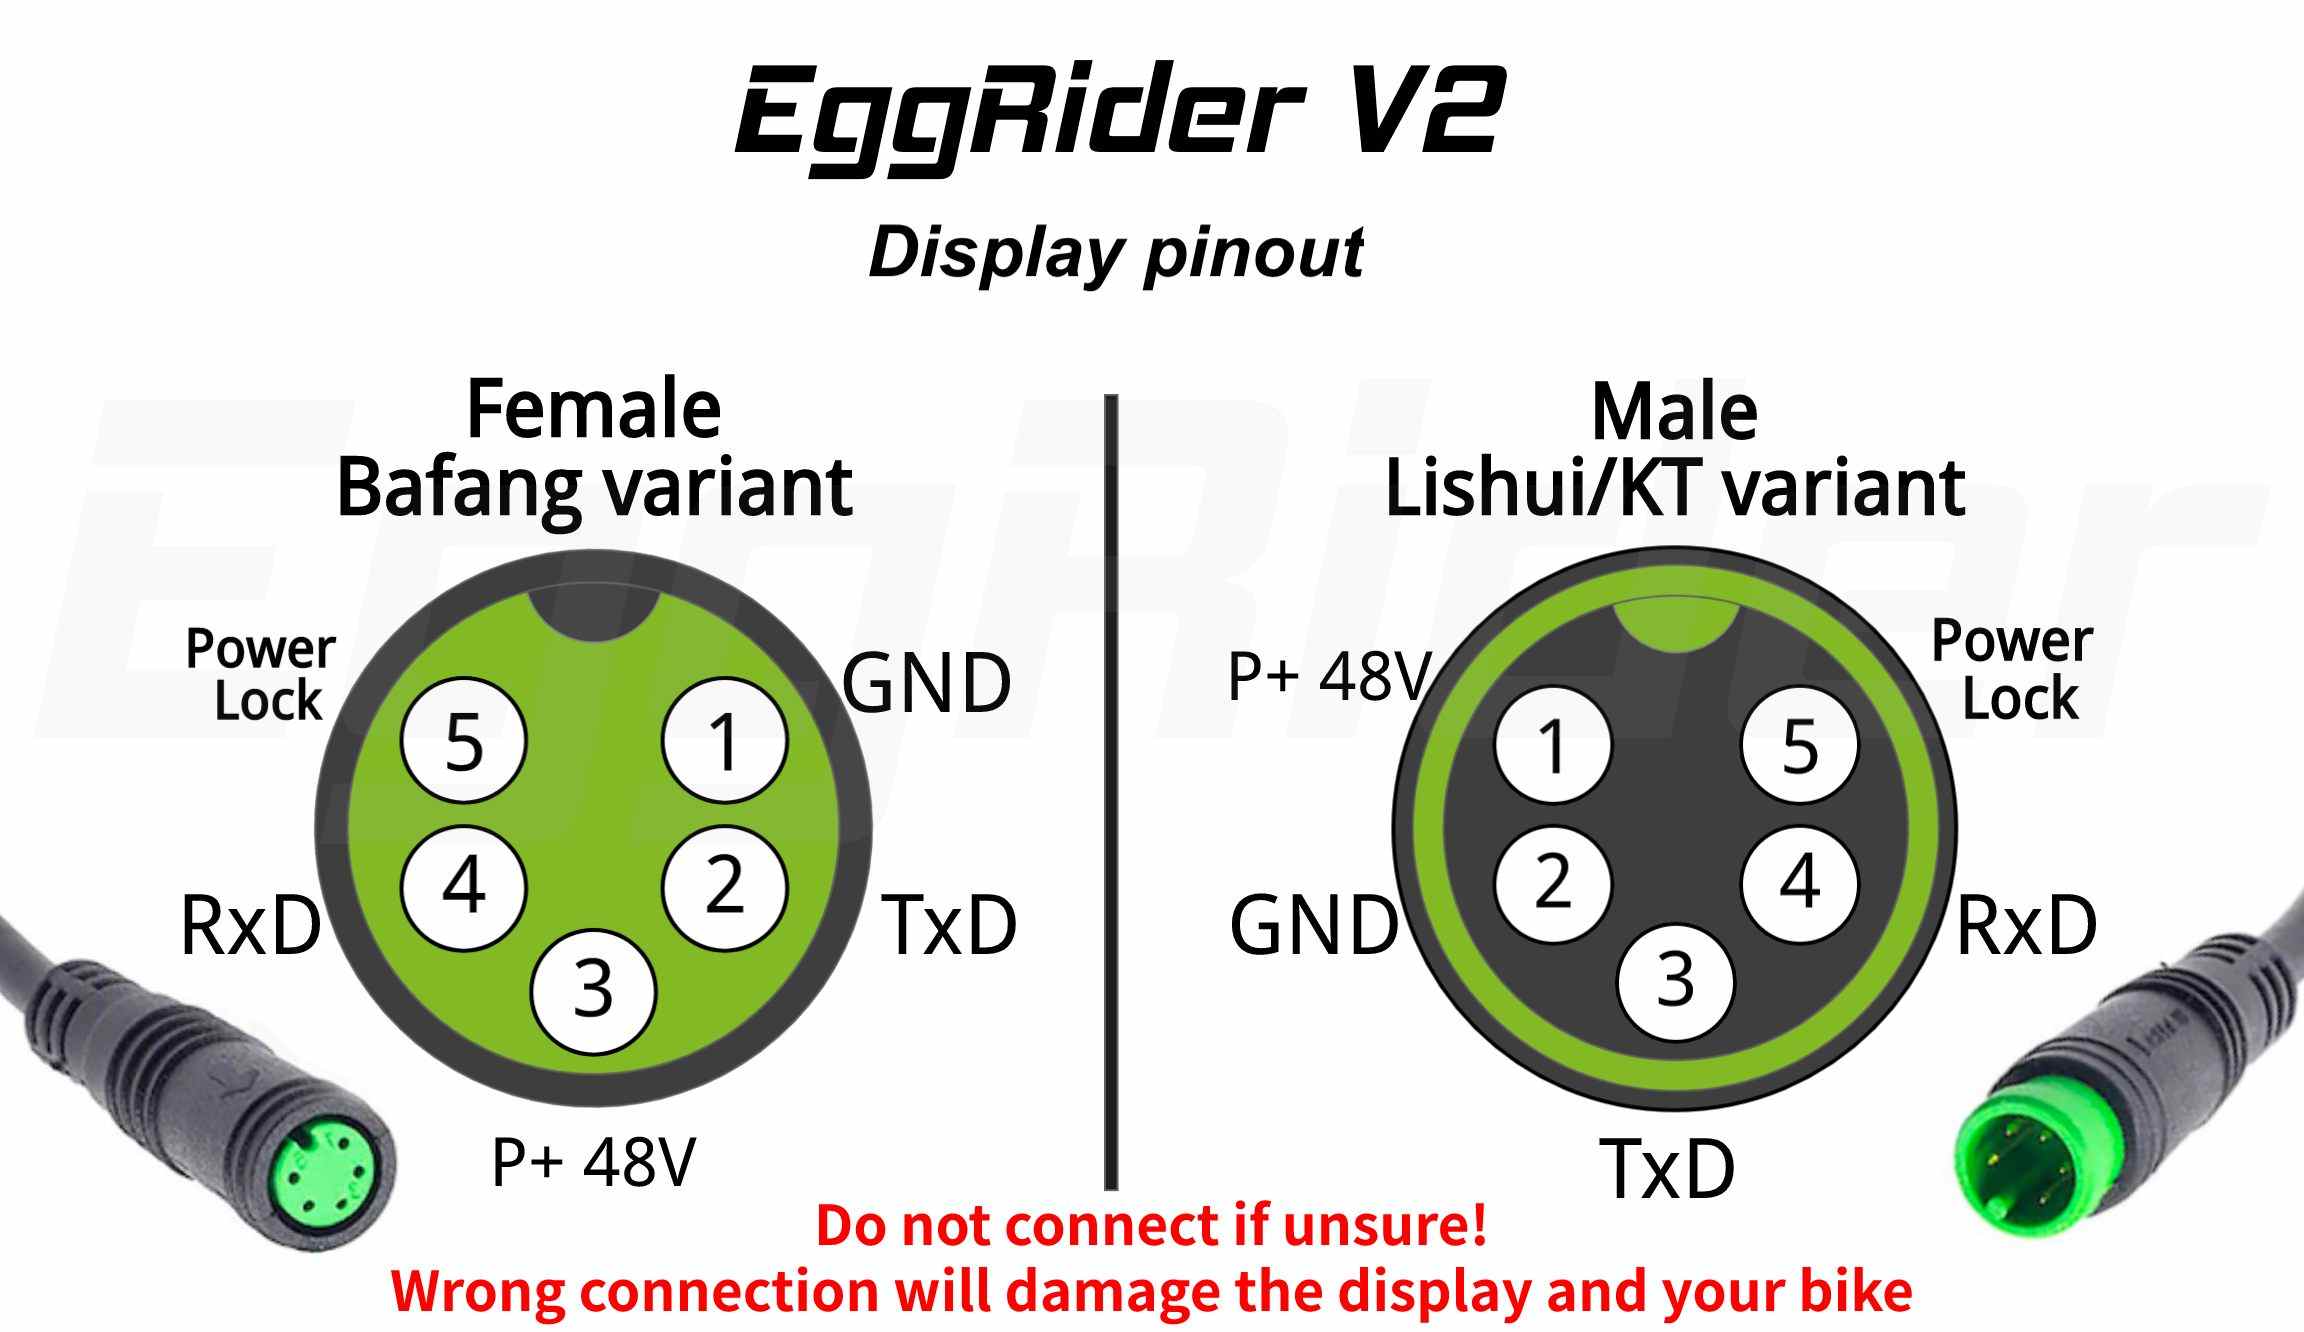 connectors_higo_5_pin_controller_display_eggrider_v2_display_pinout_photo